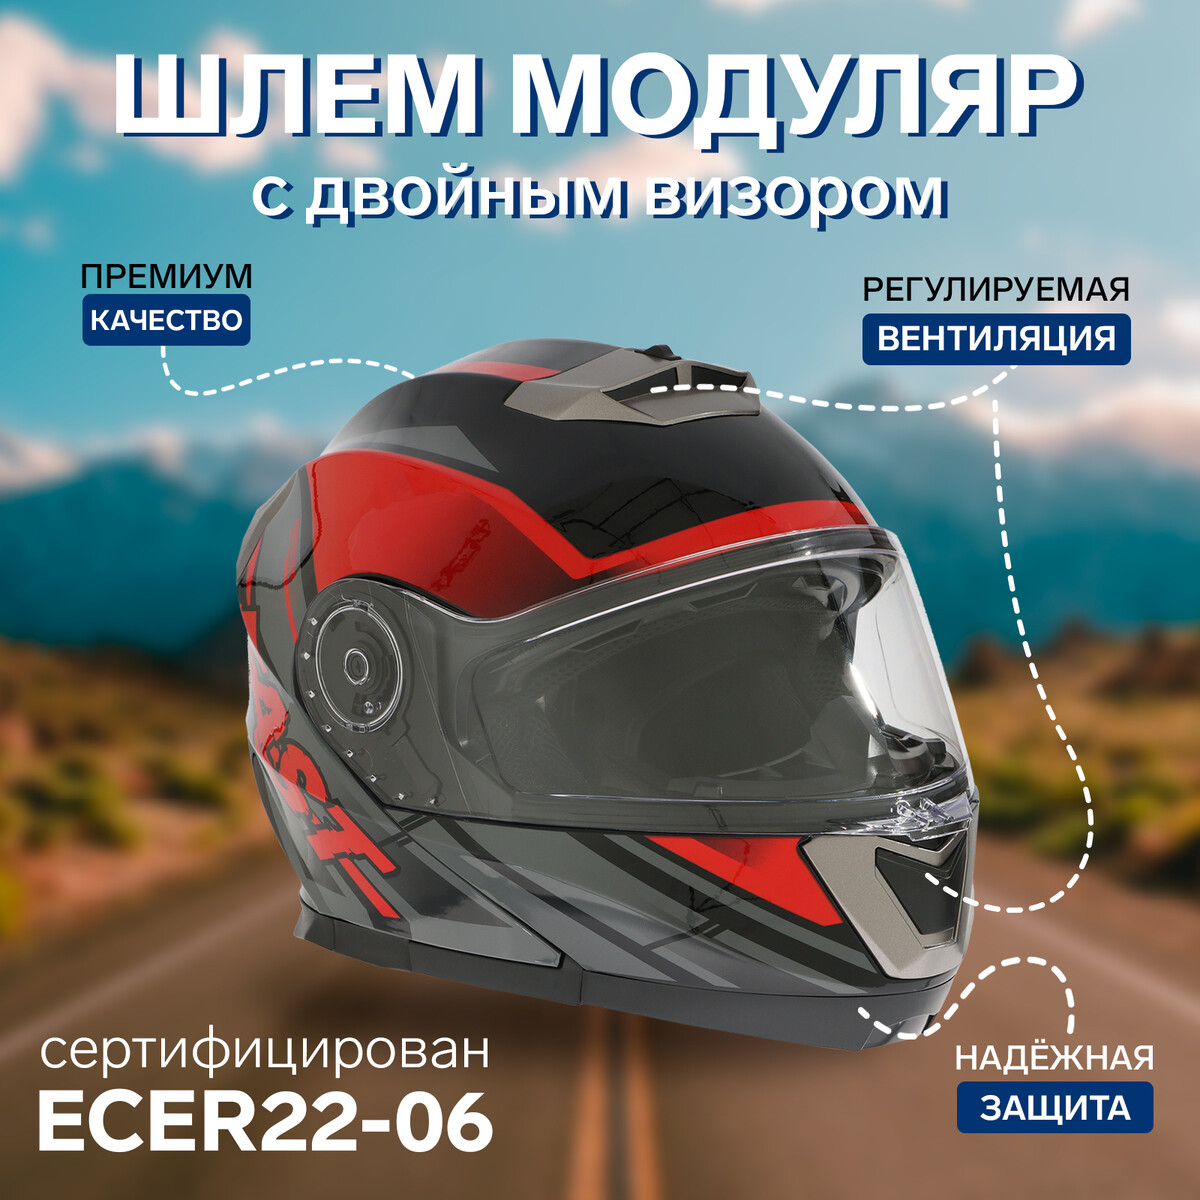 Шлем модуляр с двумя визорами, размер l (59-60), модель - bld-160e, черно-красный